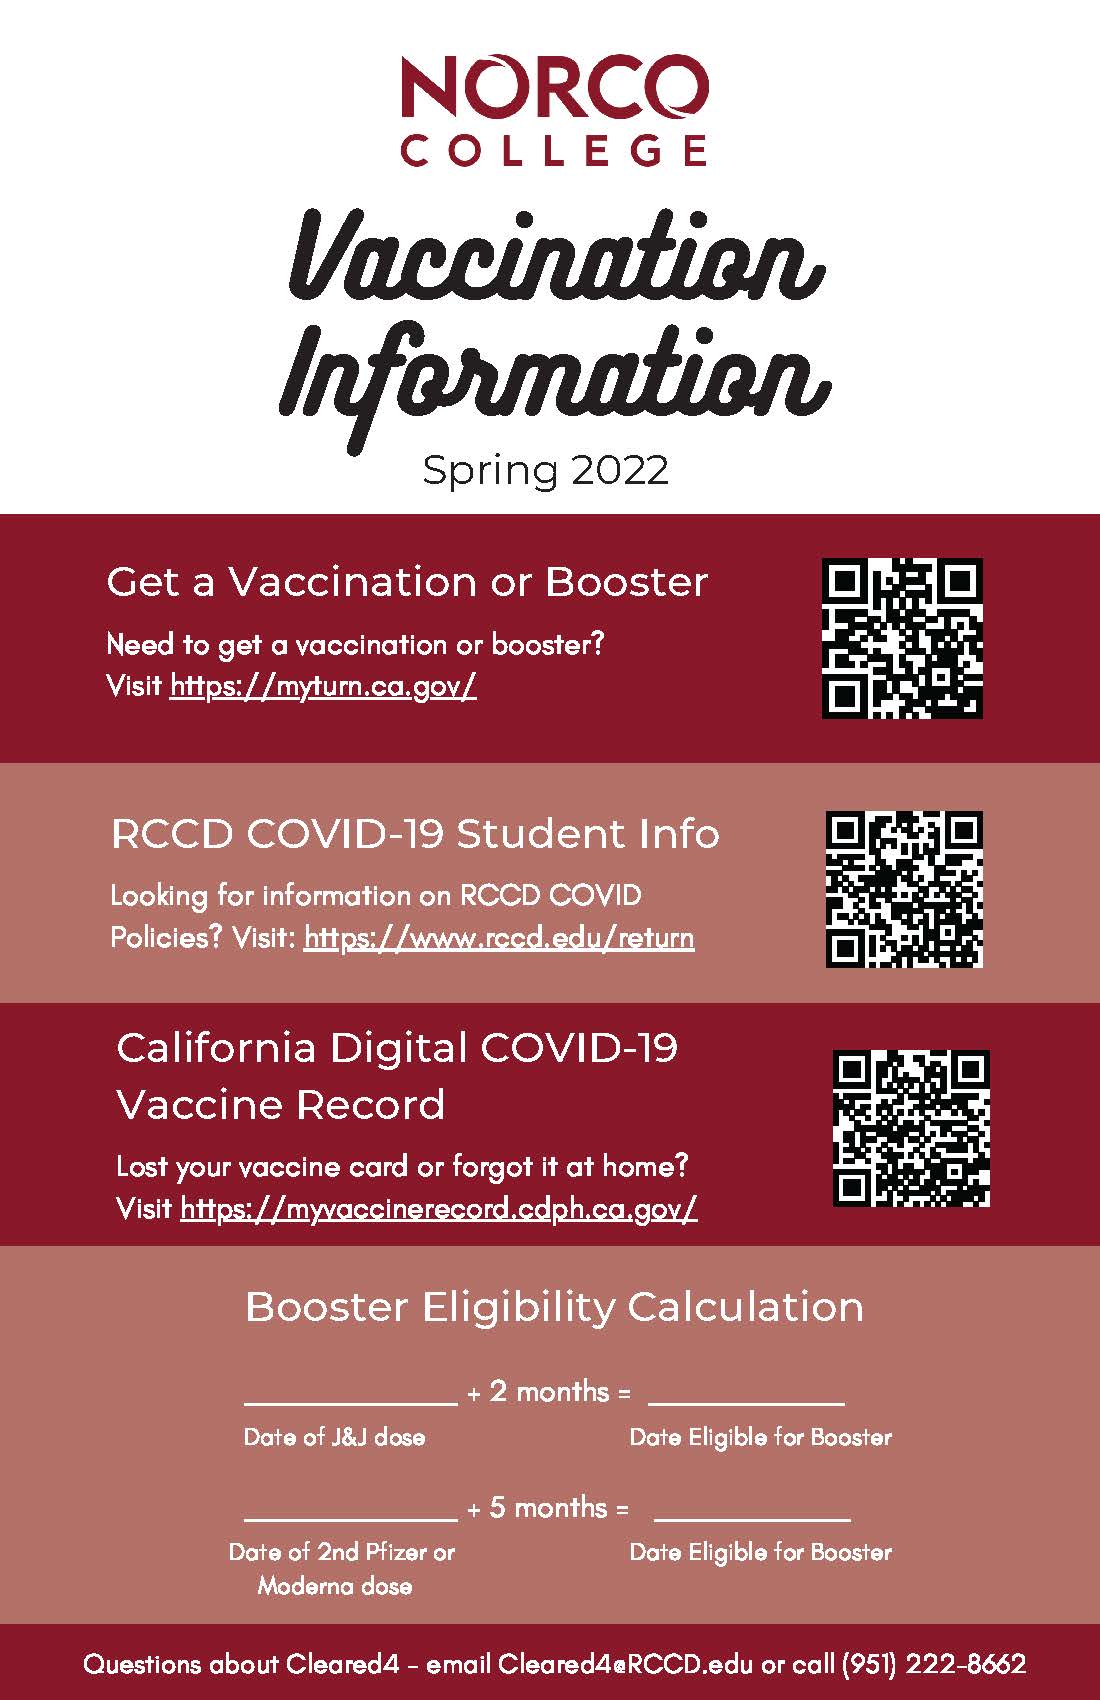 NC-Vaccination-Info_Spring22-JPG.jpg